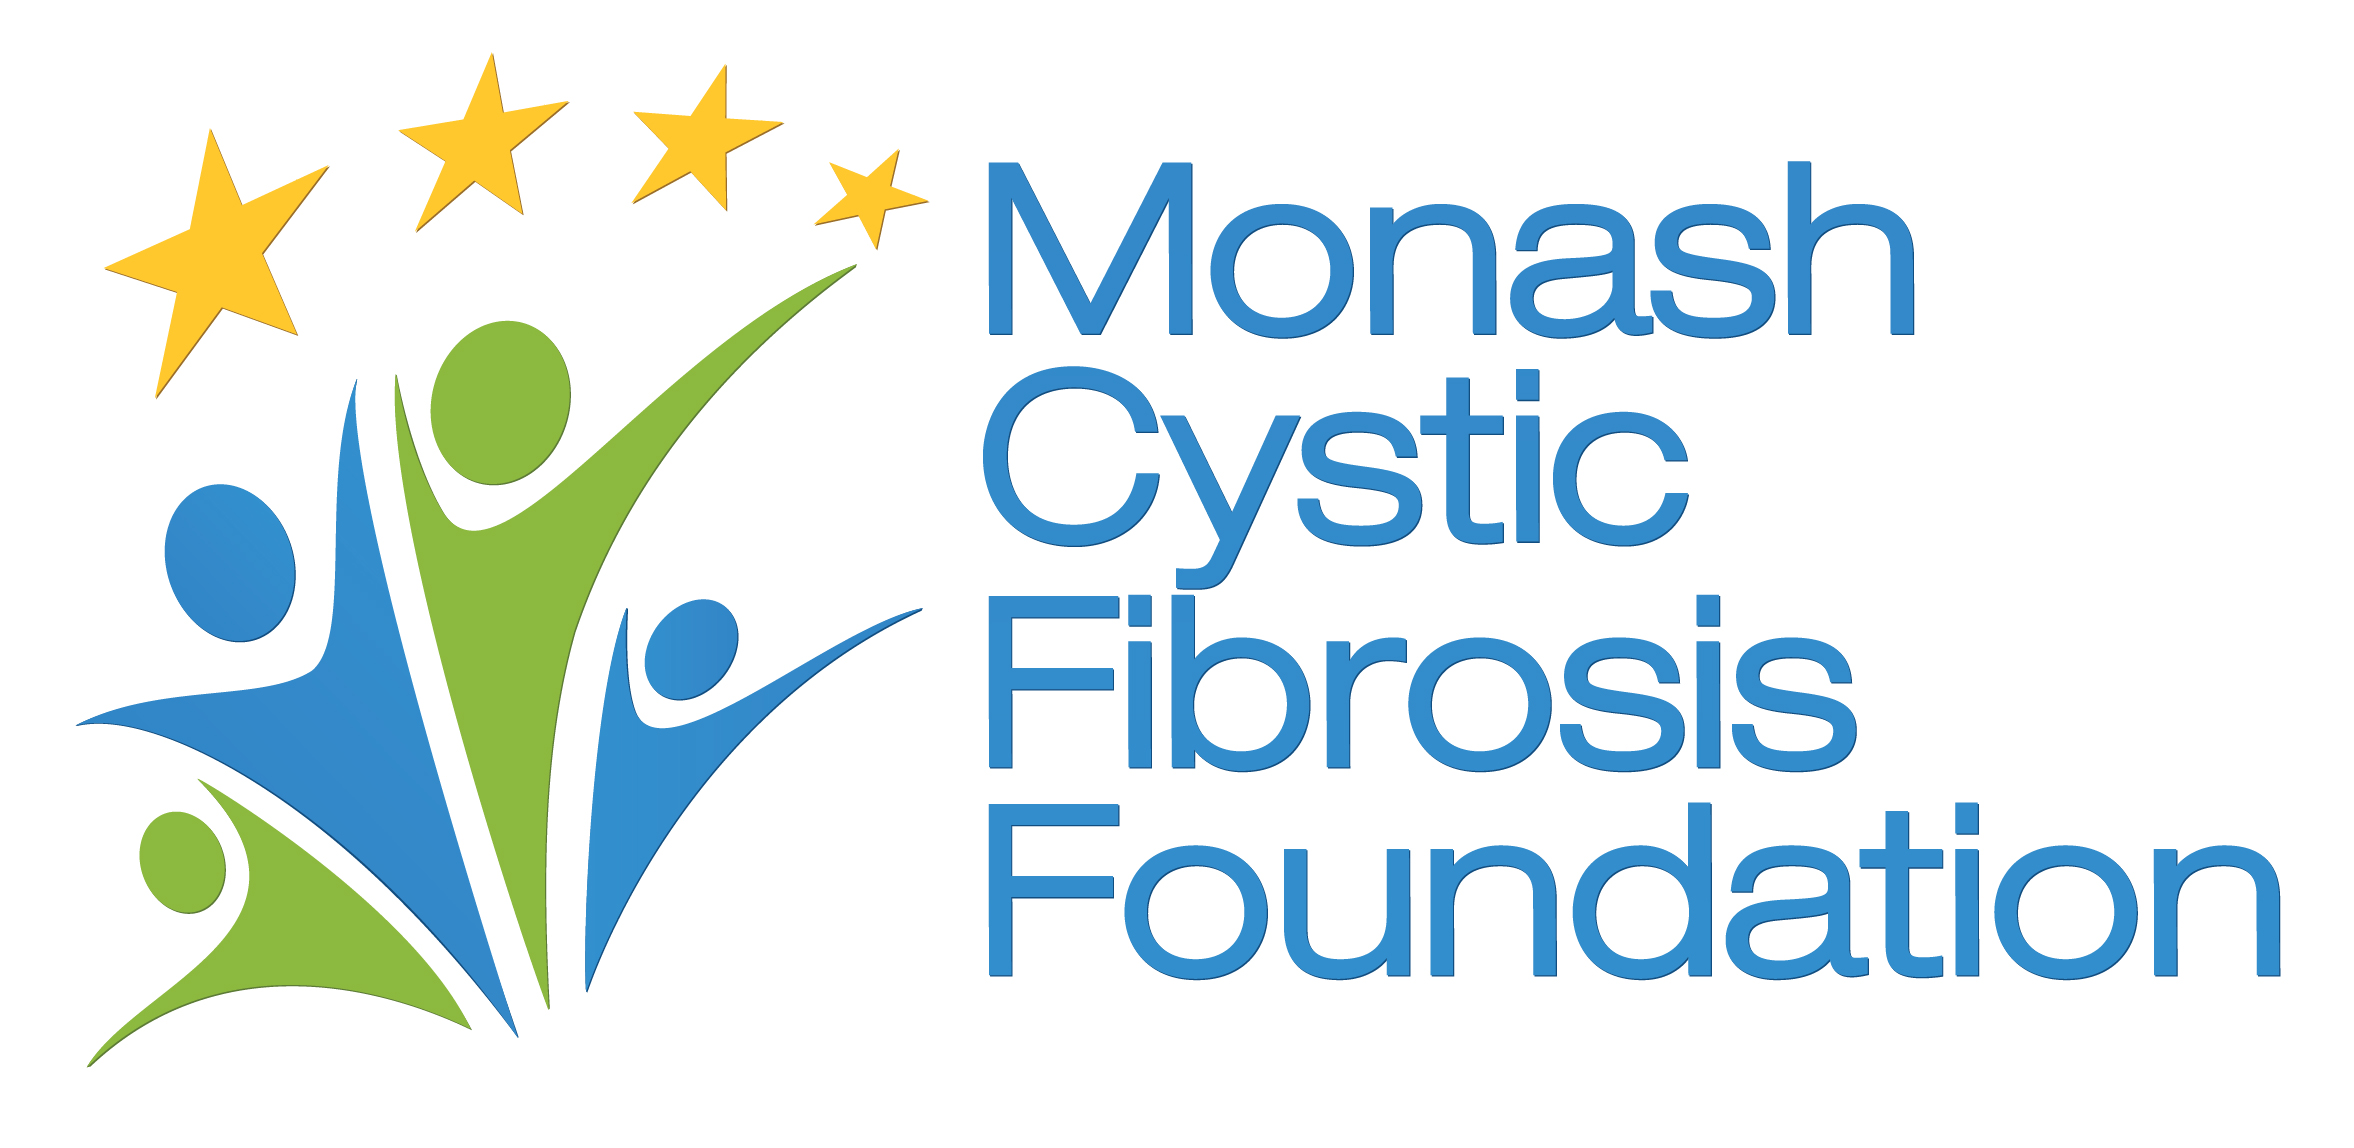 Monash Cystic Fibrosis Foundation